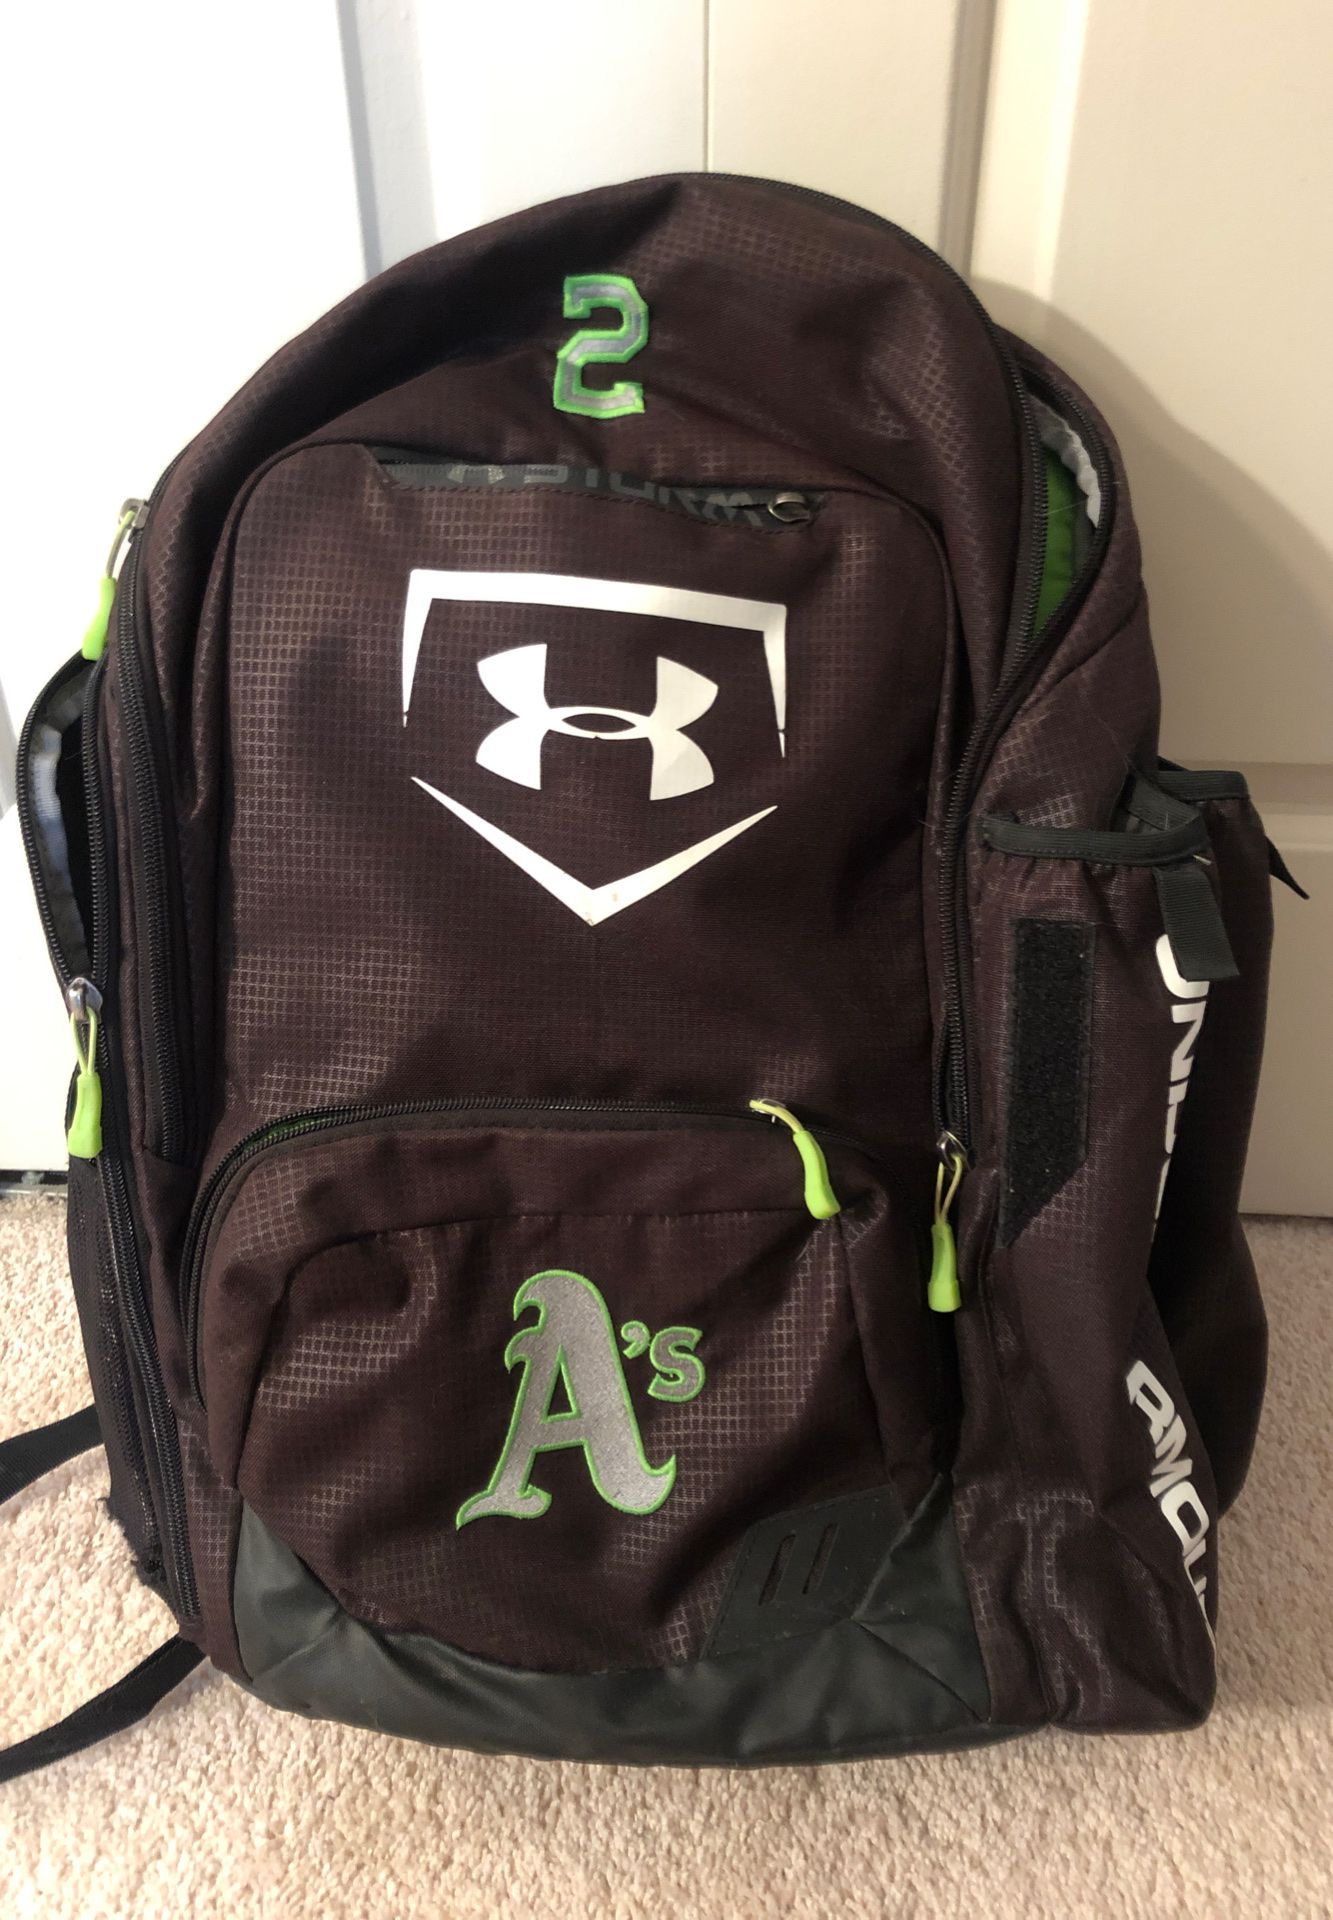 Under armour baseball bag backpack